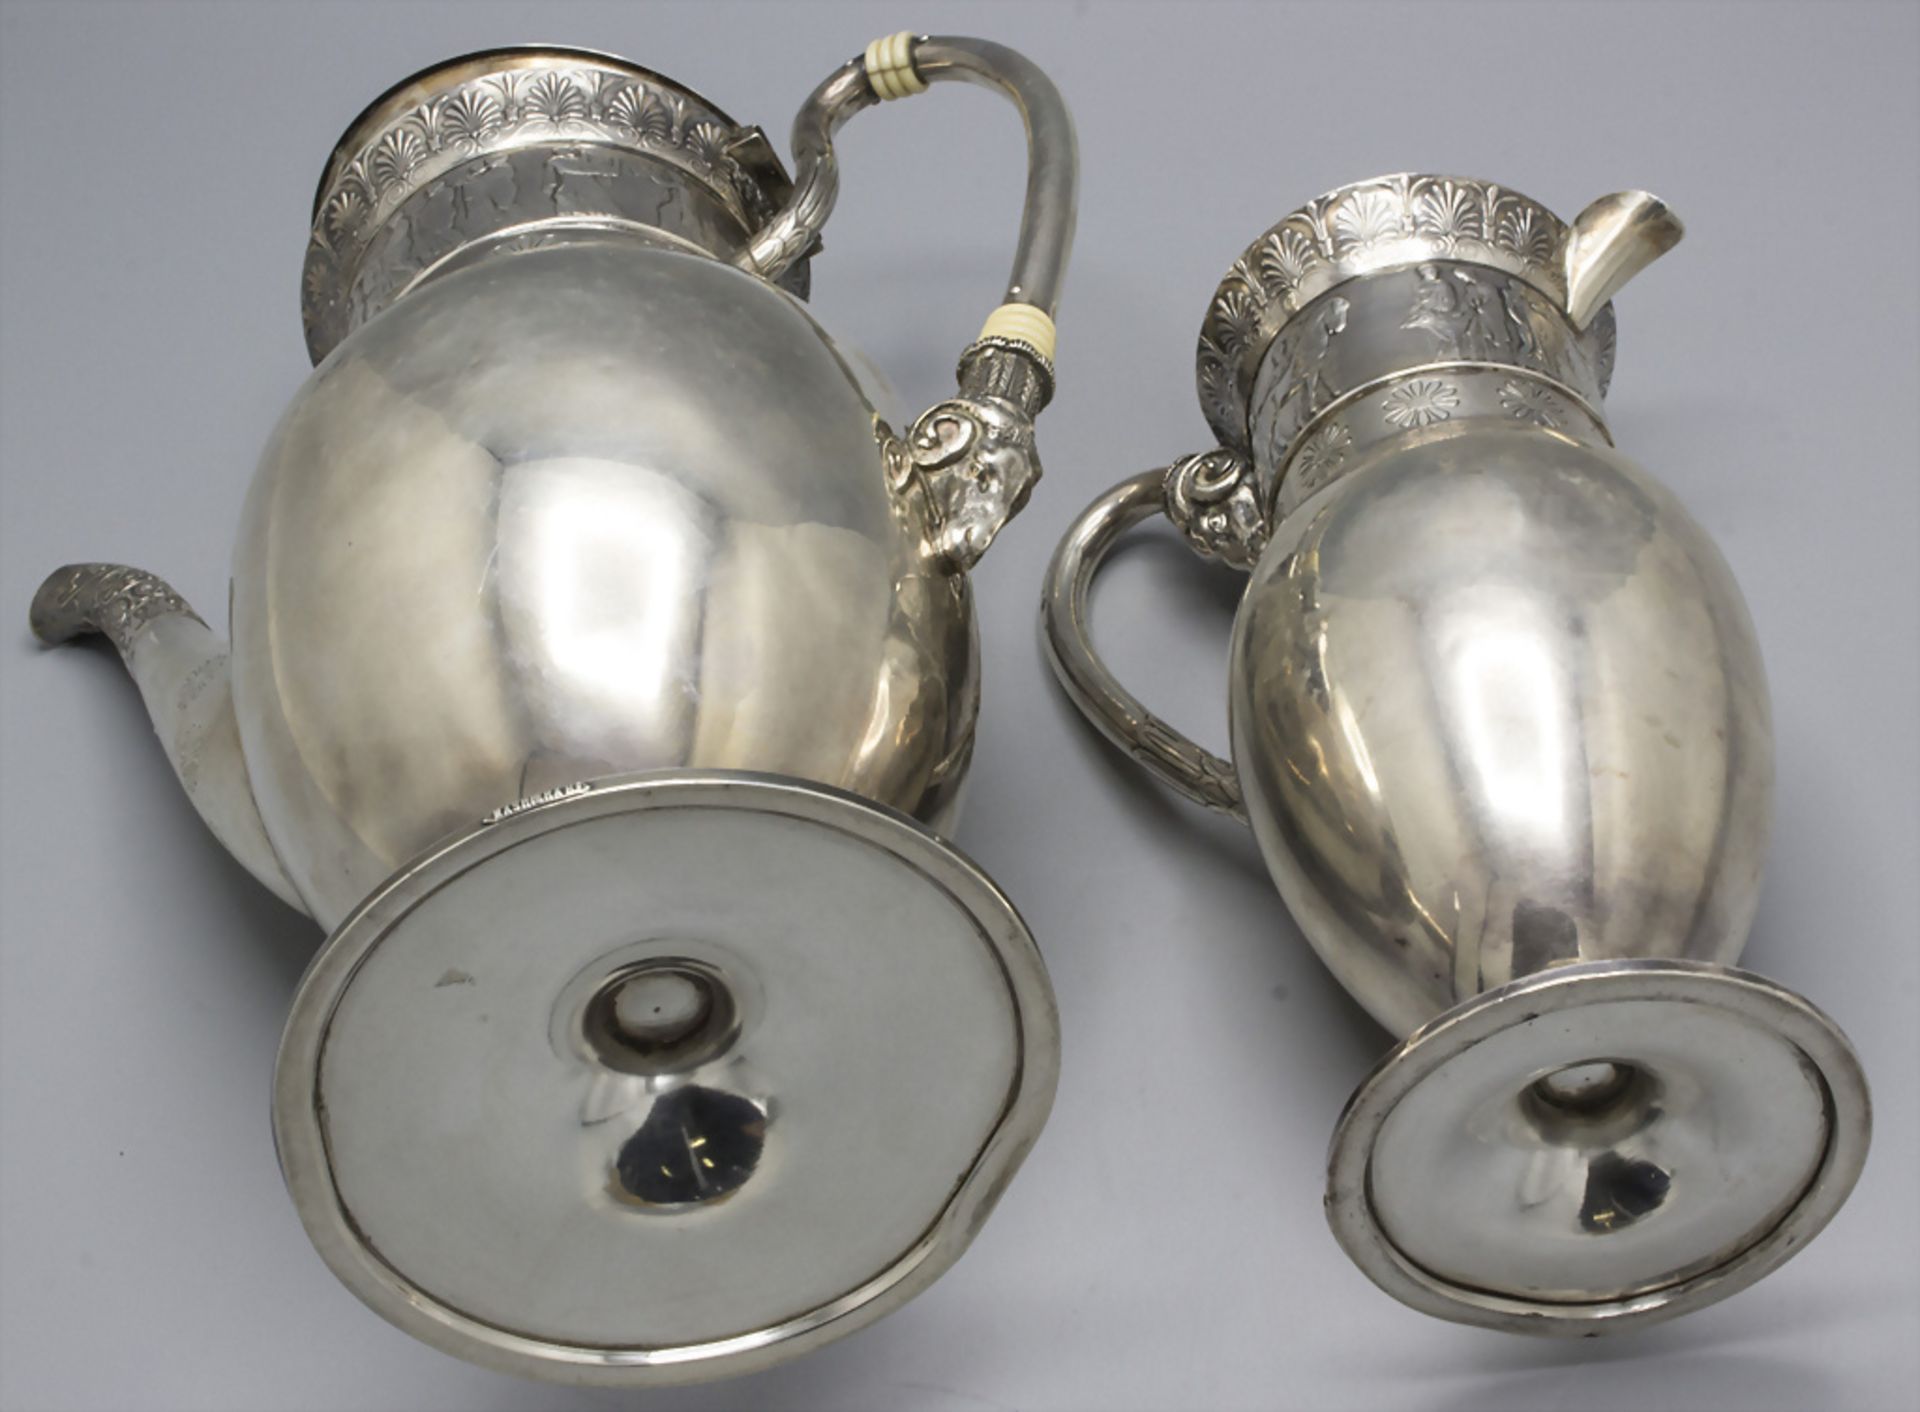 Jugendstil Kaffeekanne und Milchkanne / An Art Nouveau silver coffee pot and milk jug, ... - Image 4 of 12